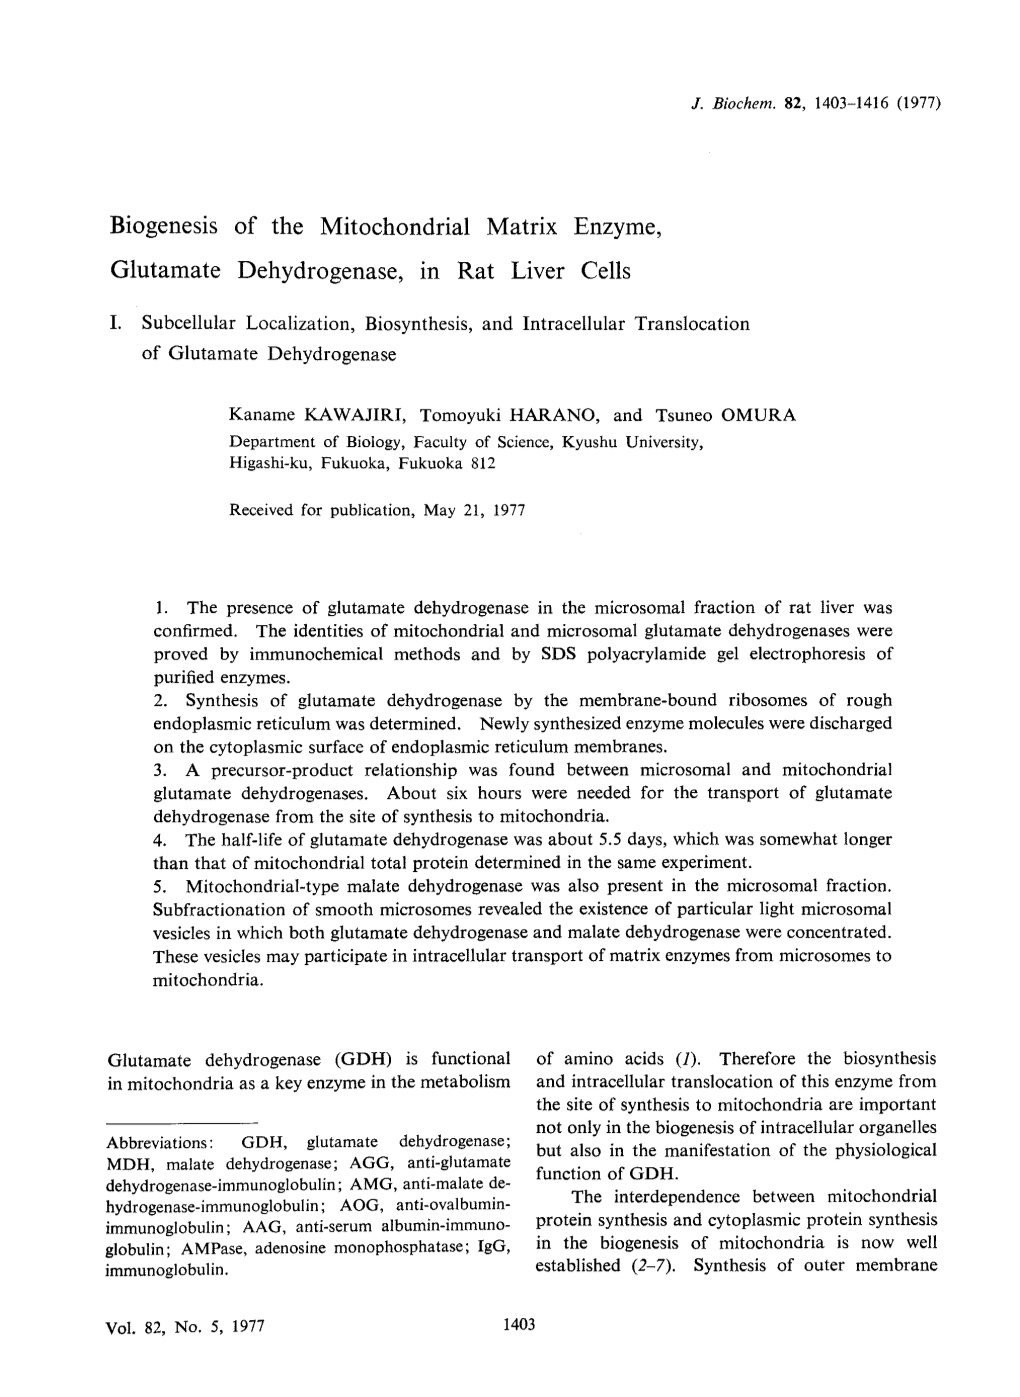 Biogenesis of the Mitochondrial Matrix Enzyme, Glutamate